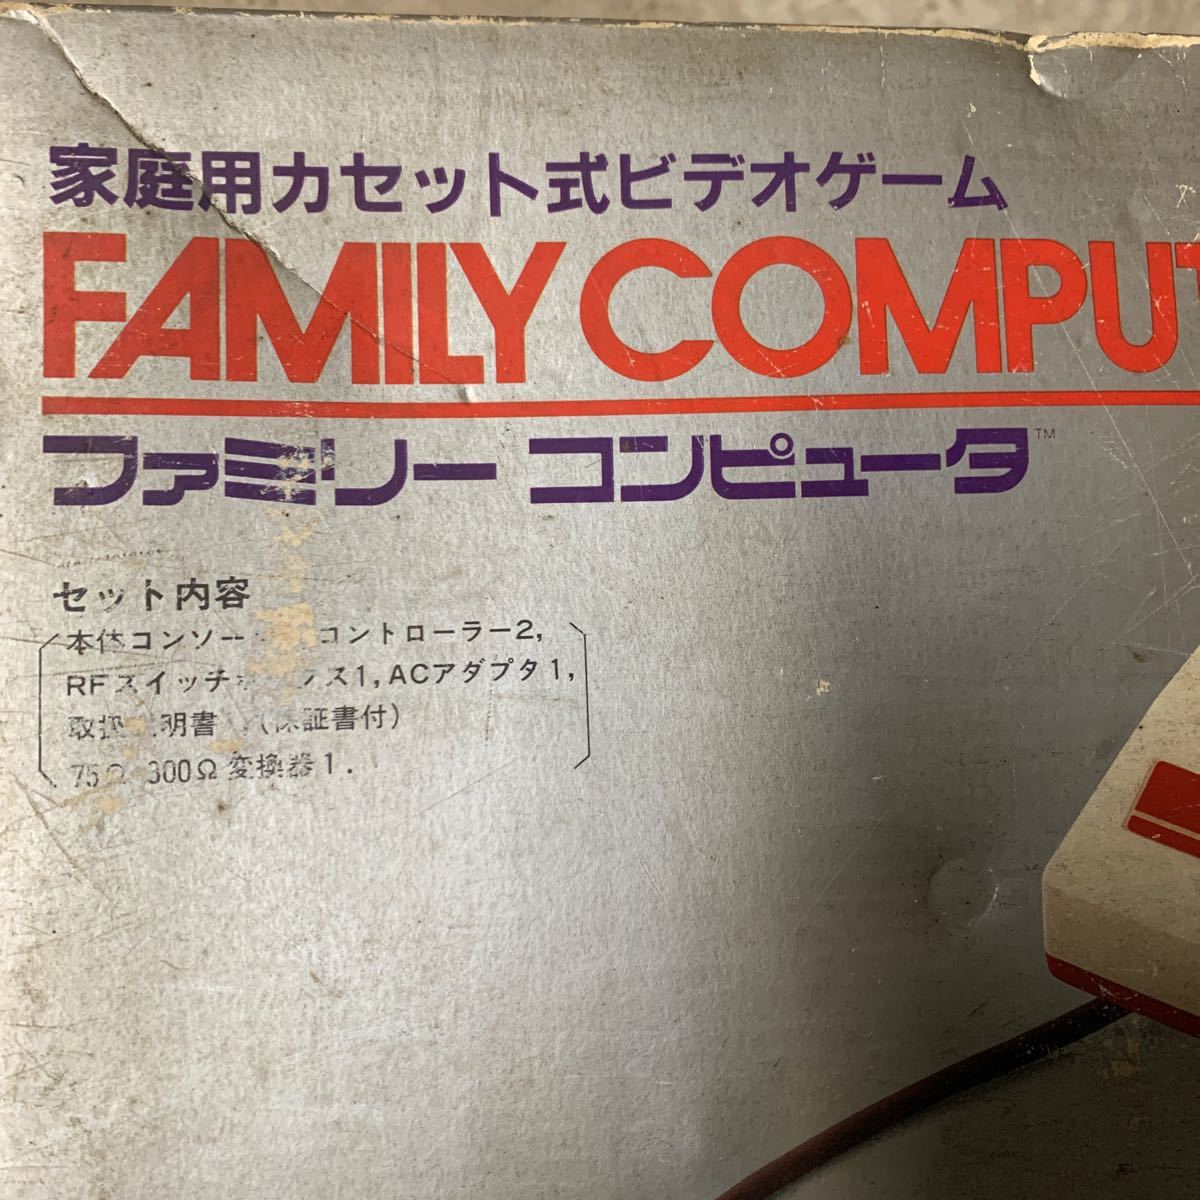 [ ultra rare / beautiful goods / rare ] nintendo Family computer Famicom body the first period four angle button disk system 2 box set Nintendo